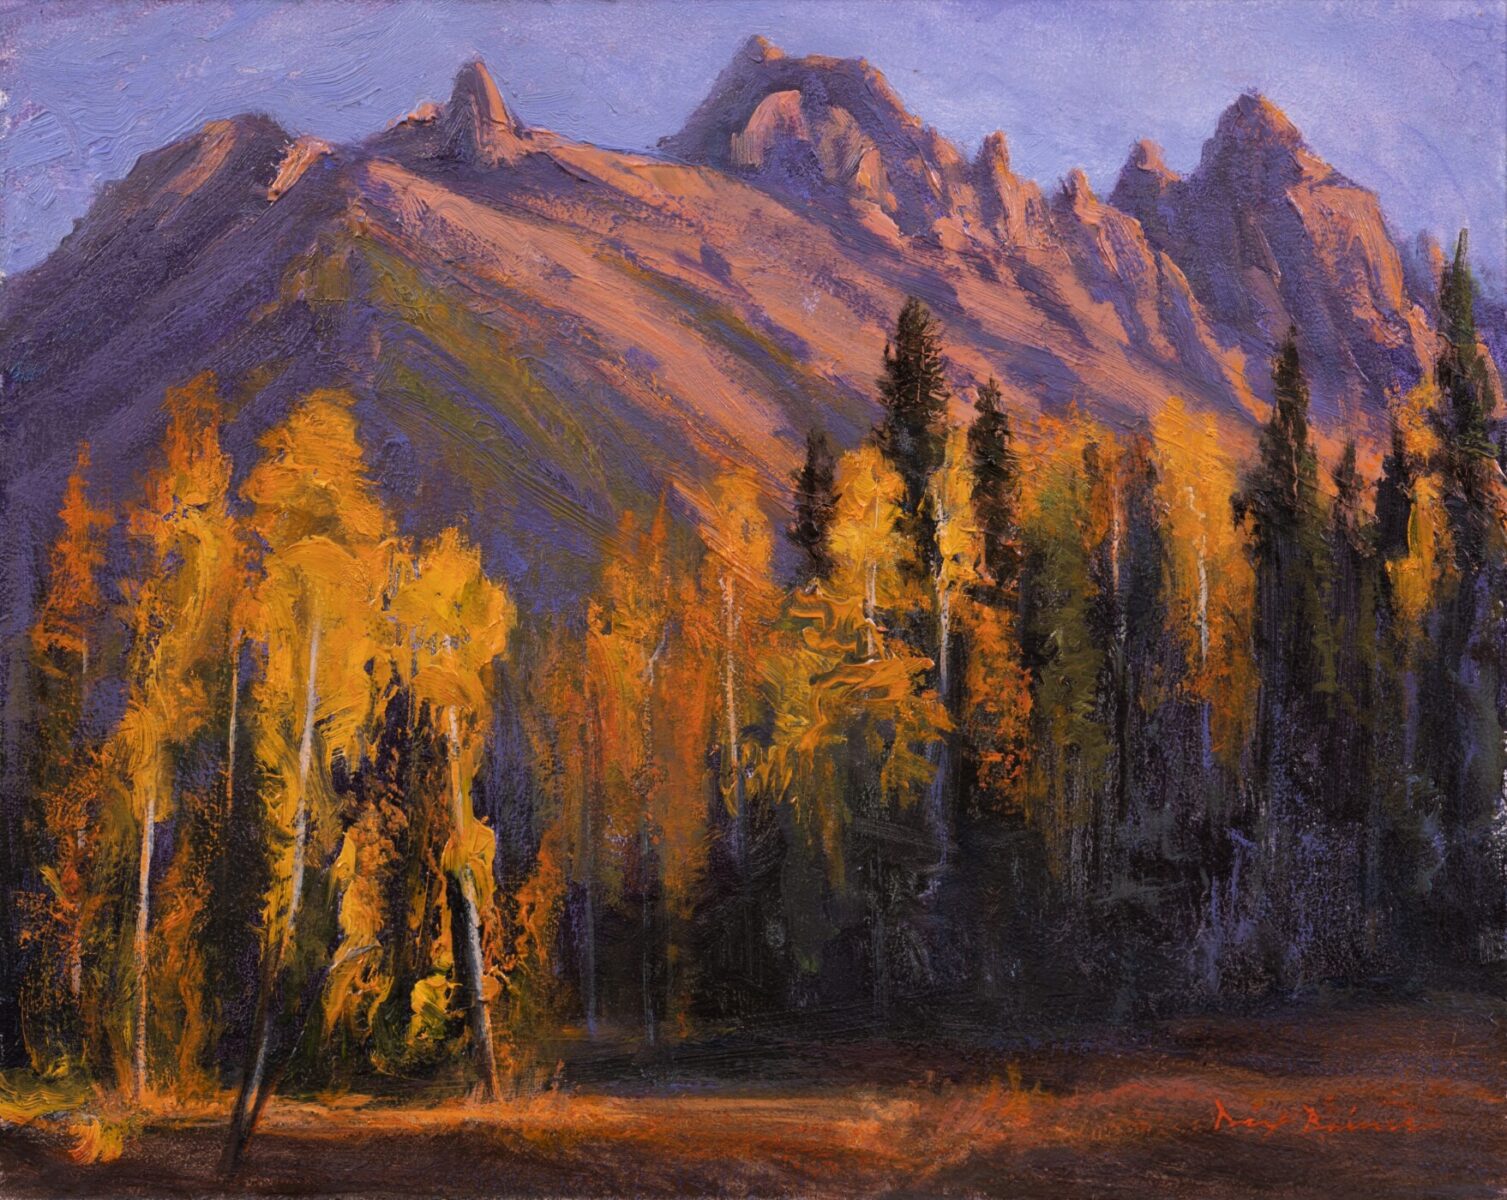 Oil landscape painting by Dix Baines